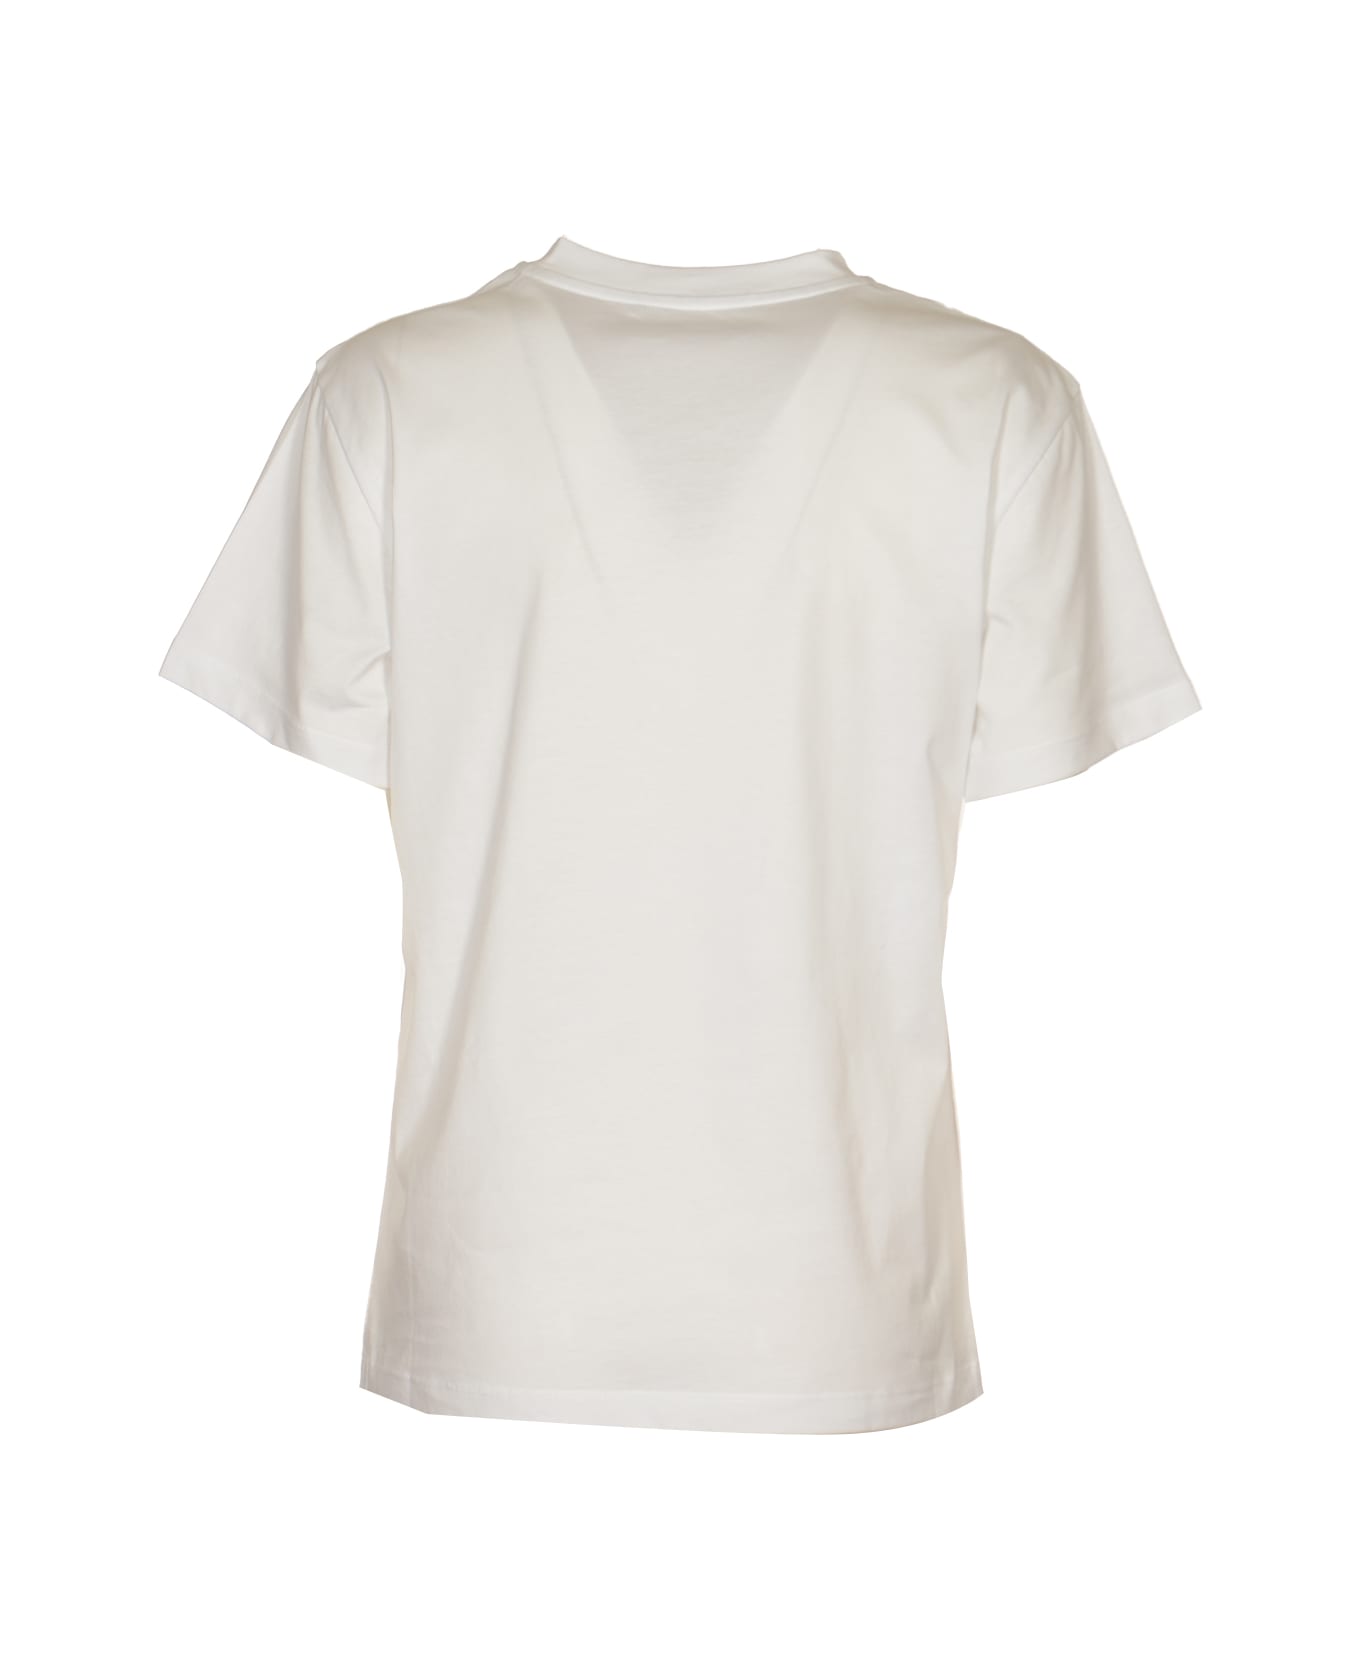 Alberta Ferretti Logo Printed T-shirt - FANTASIA BIANCO Tシャツ